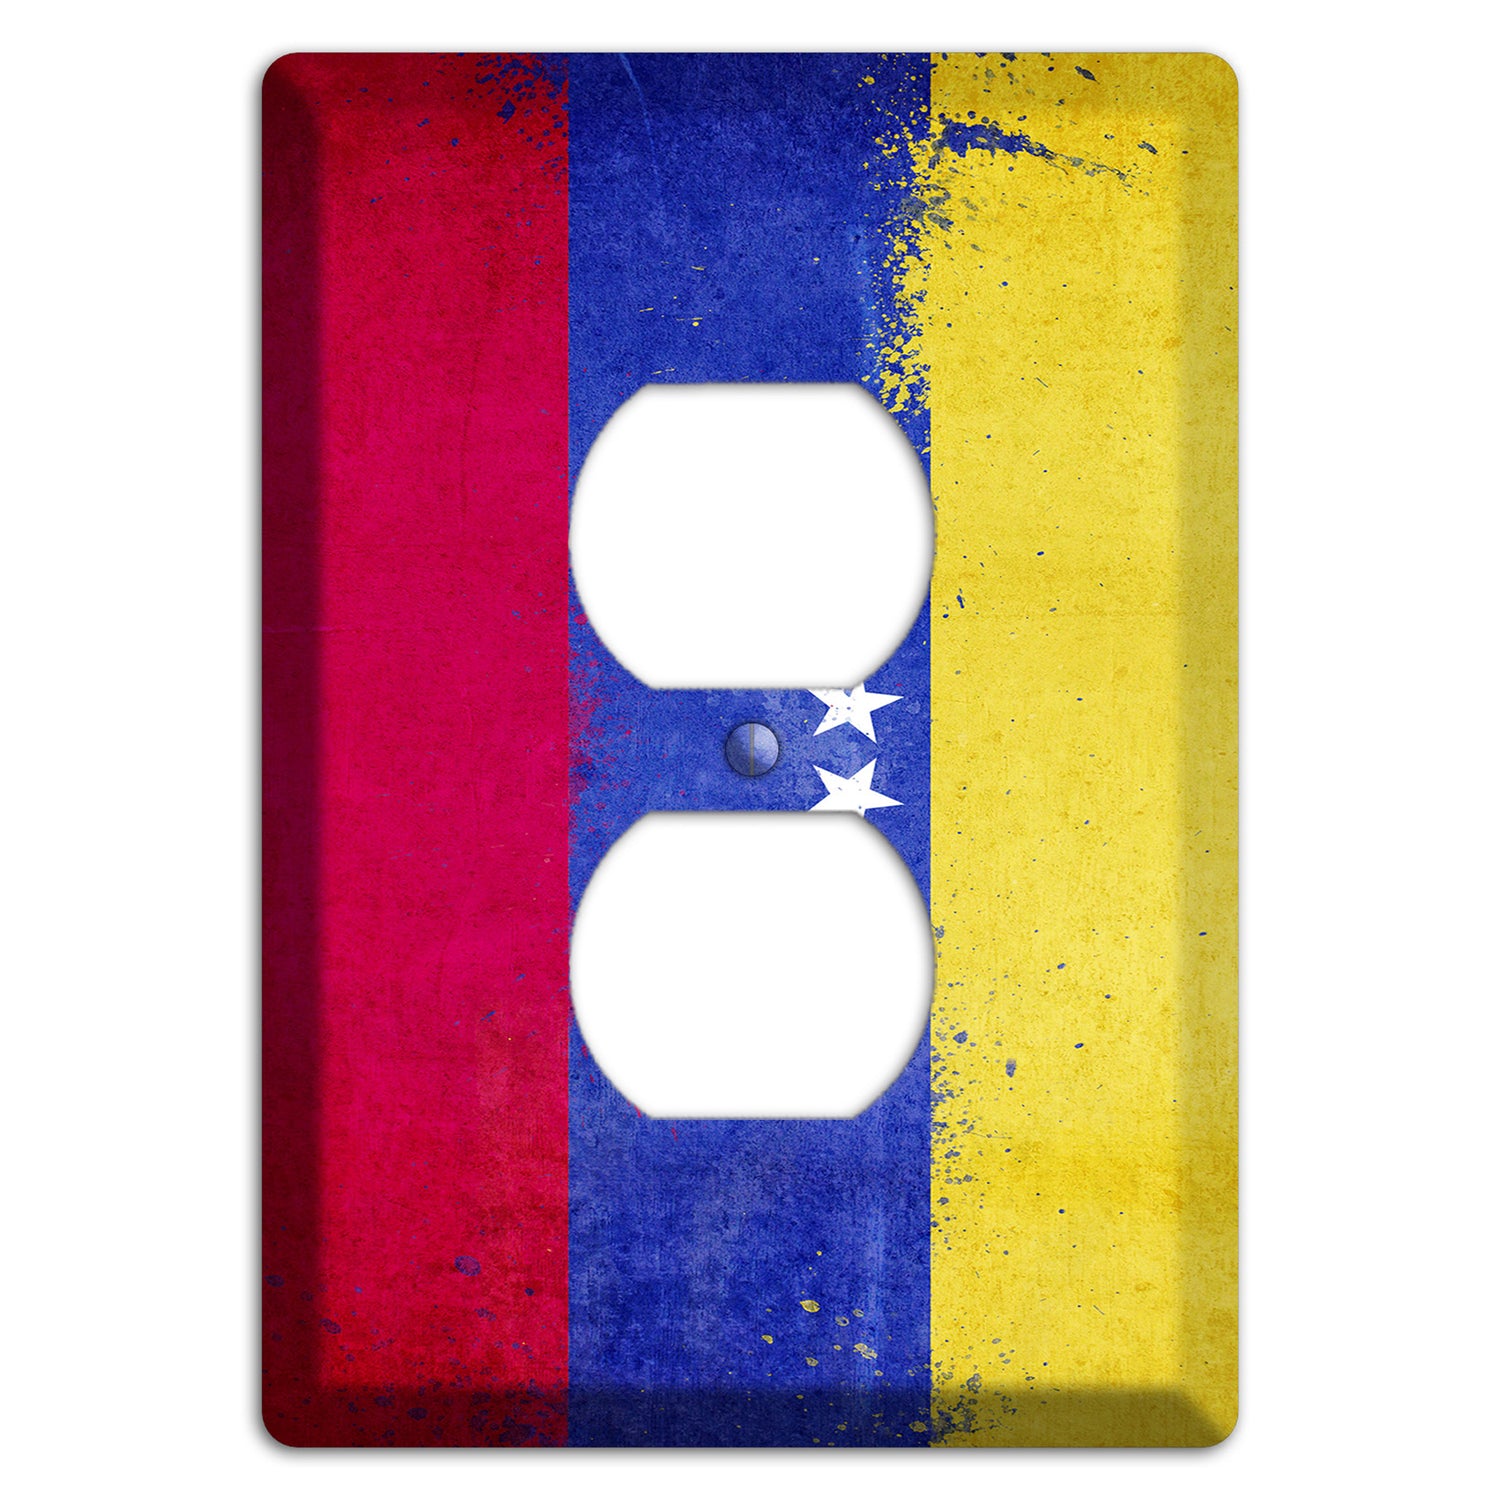 Venezuela Cover Plates Duplex Outlet Wallplate